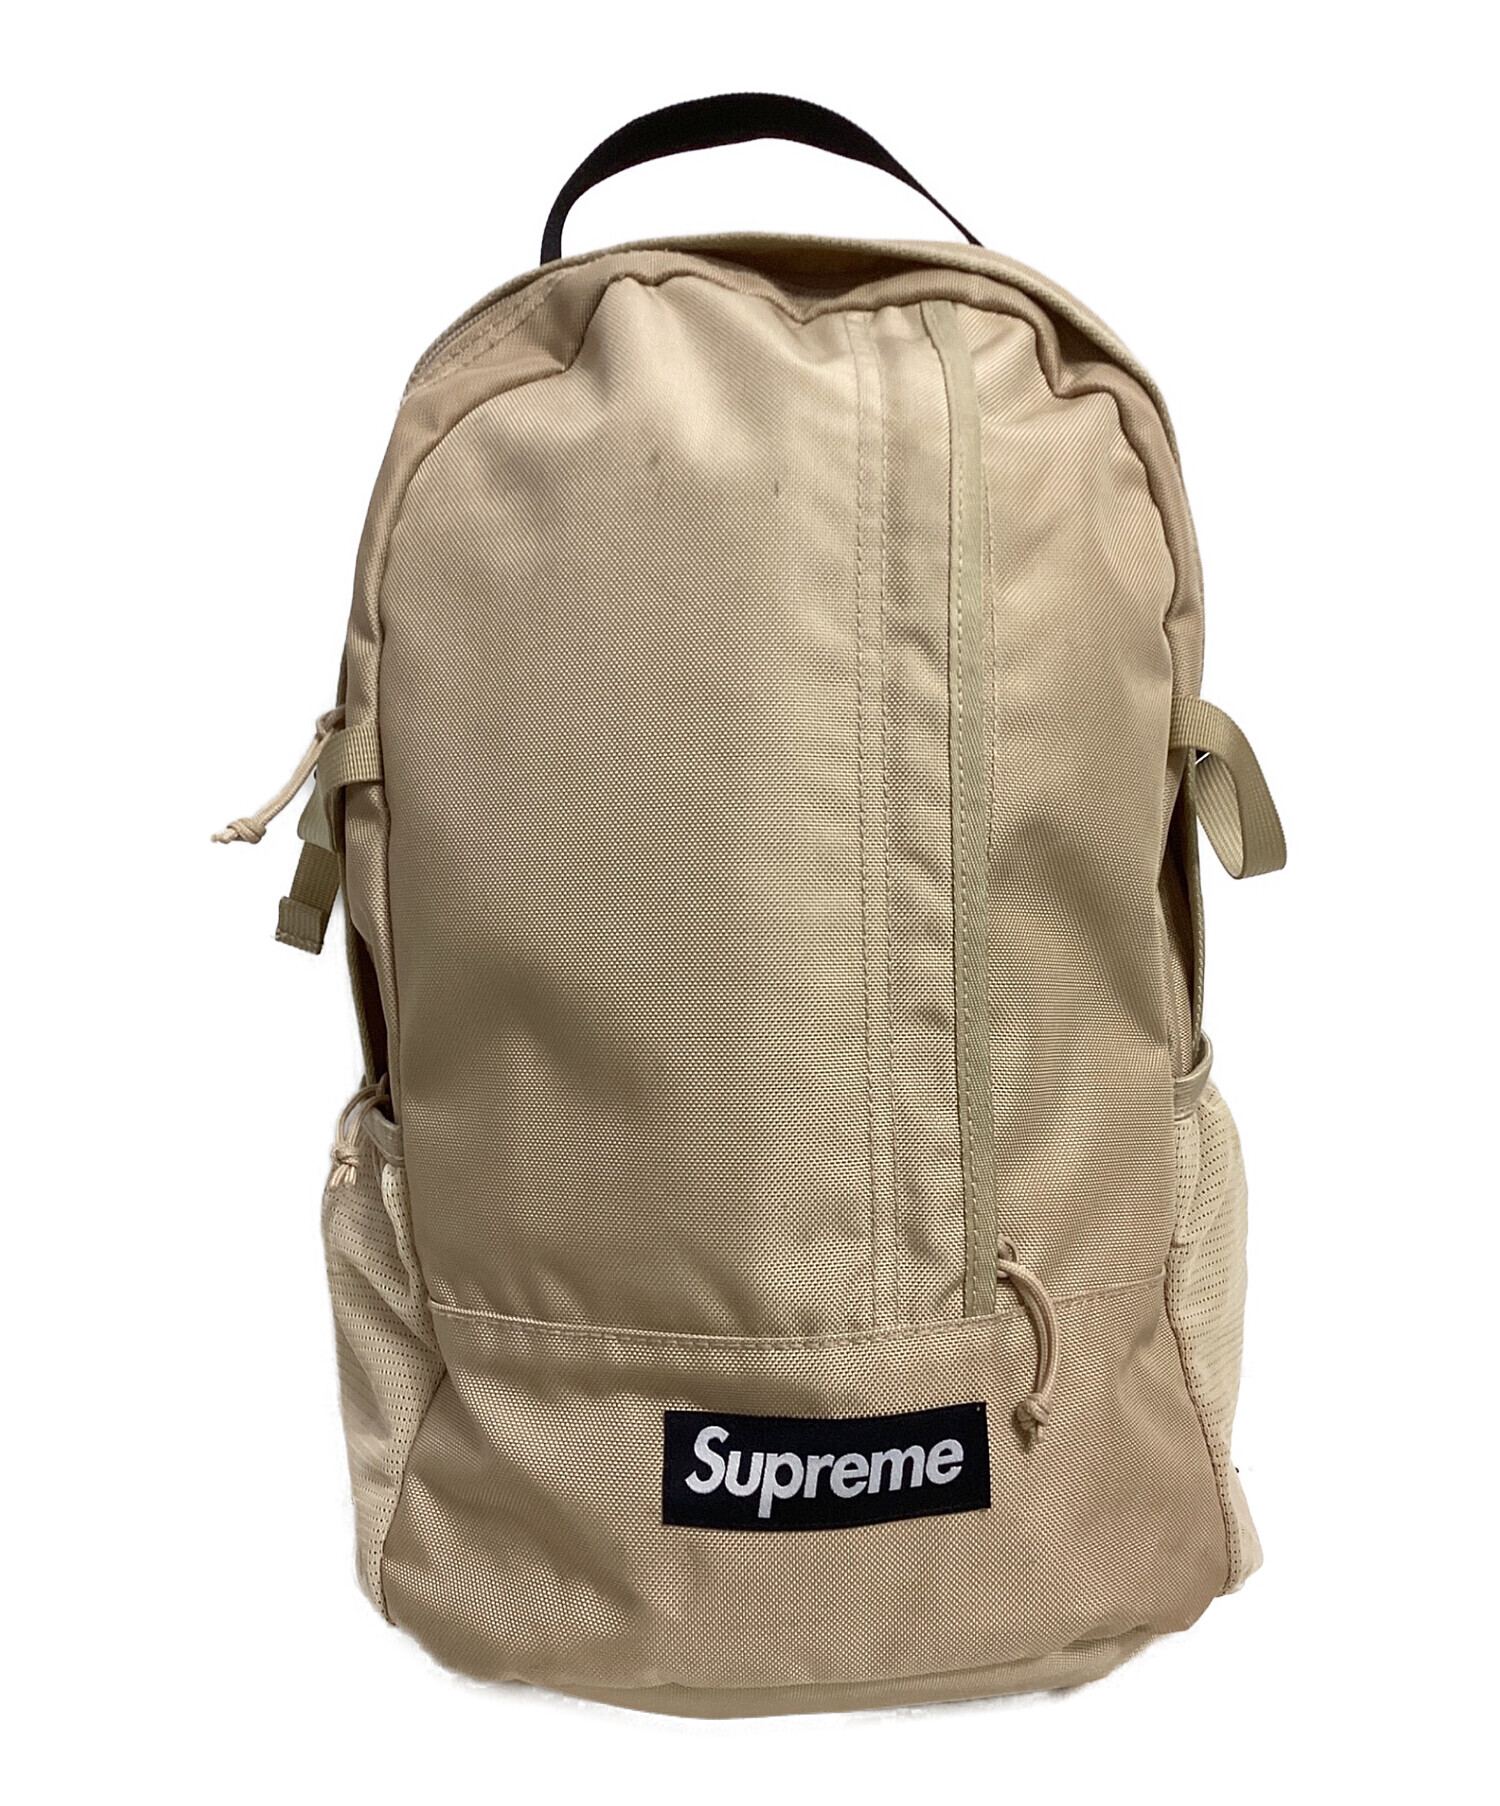 supreme backpack ベージュ - バッグパック/リュック